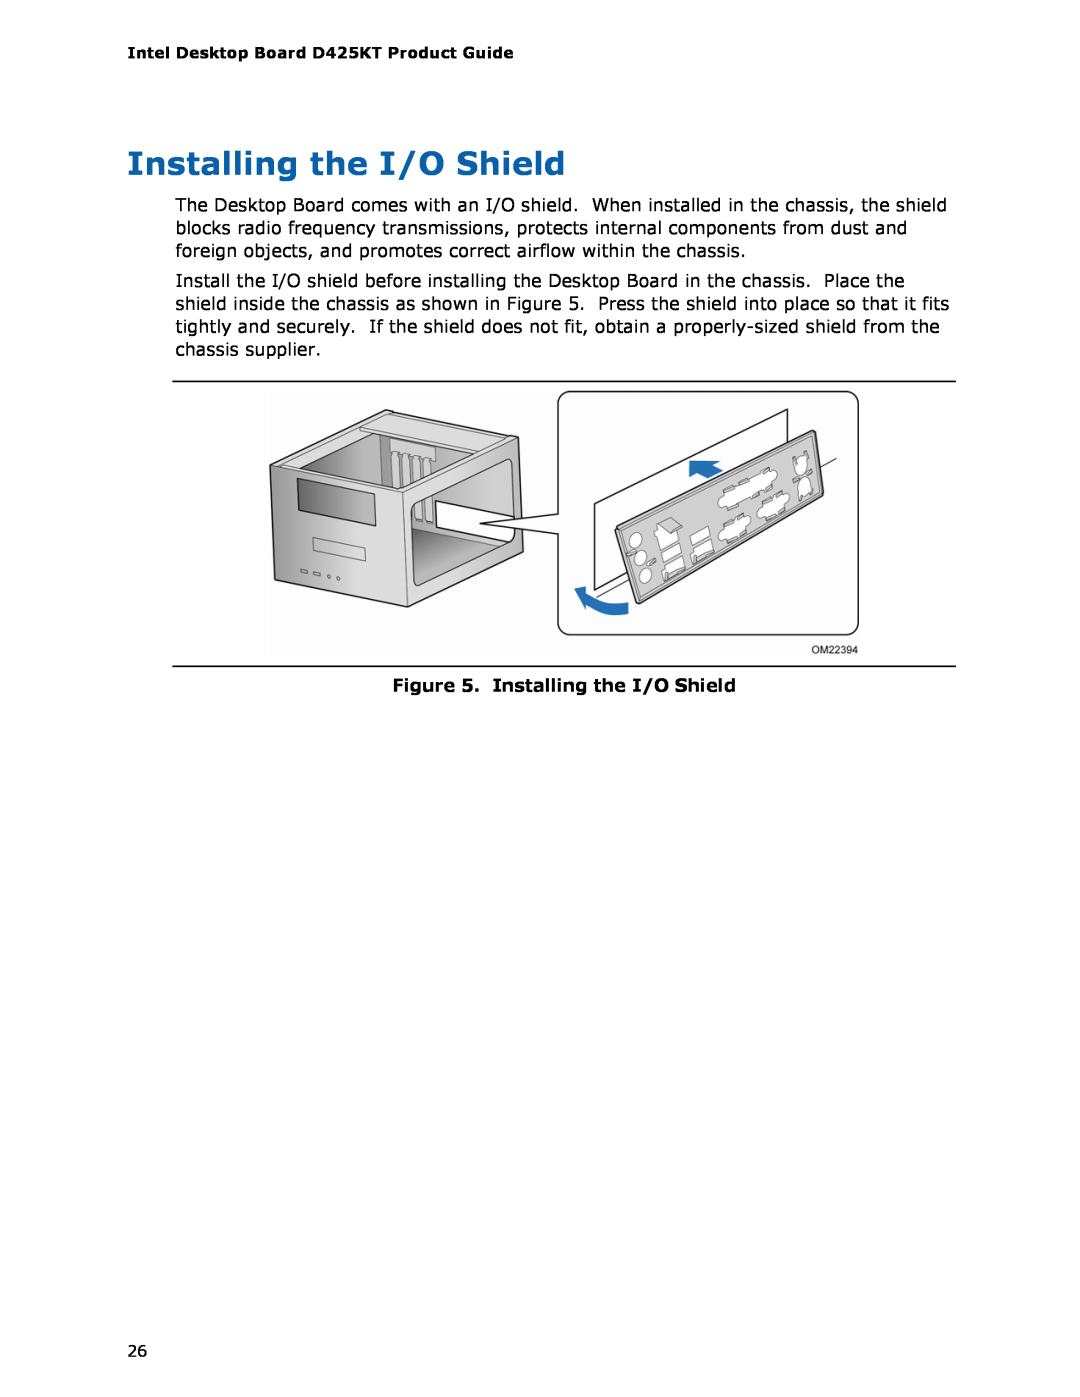 Intel D425KT manual Installing the I/O Shield 